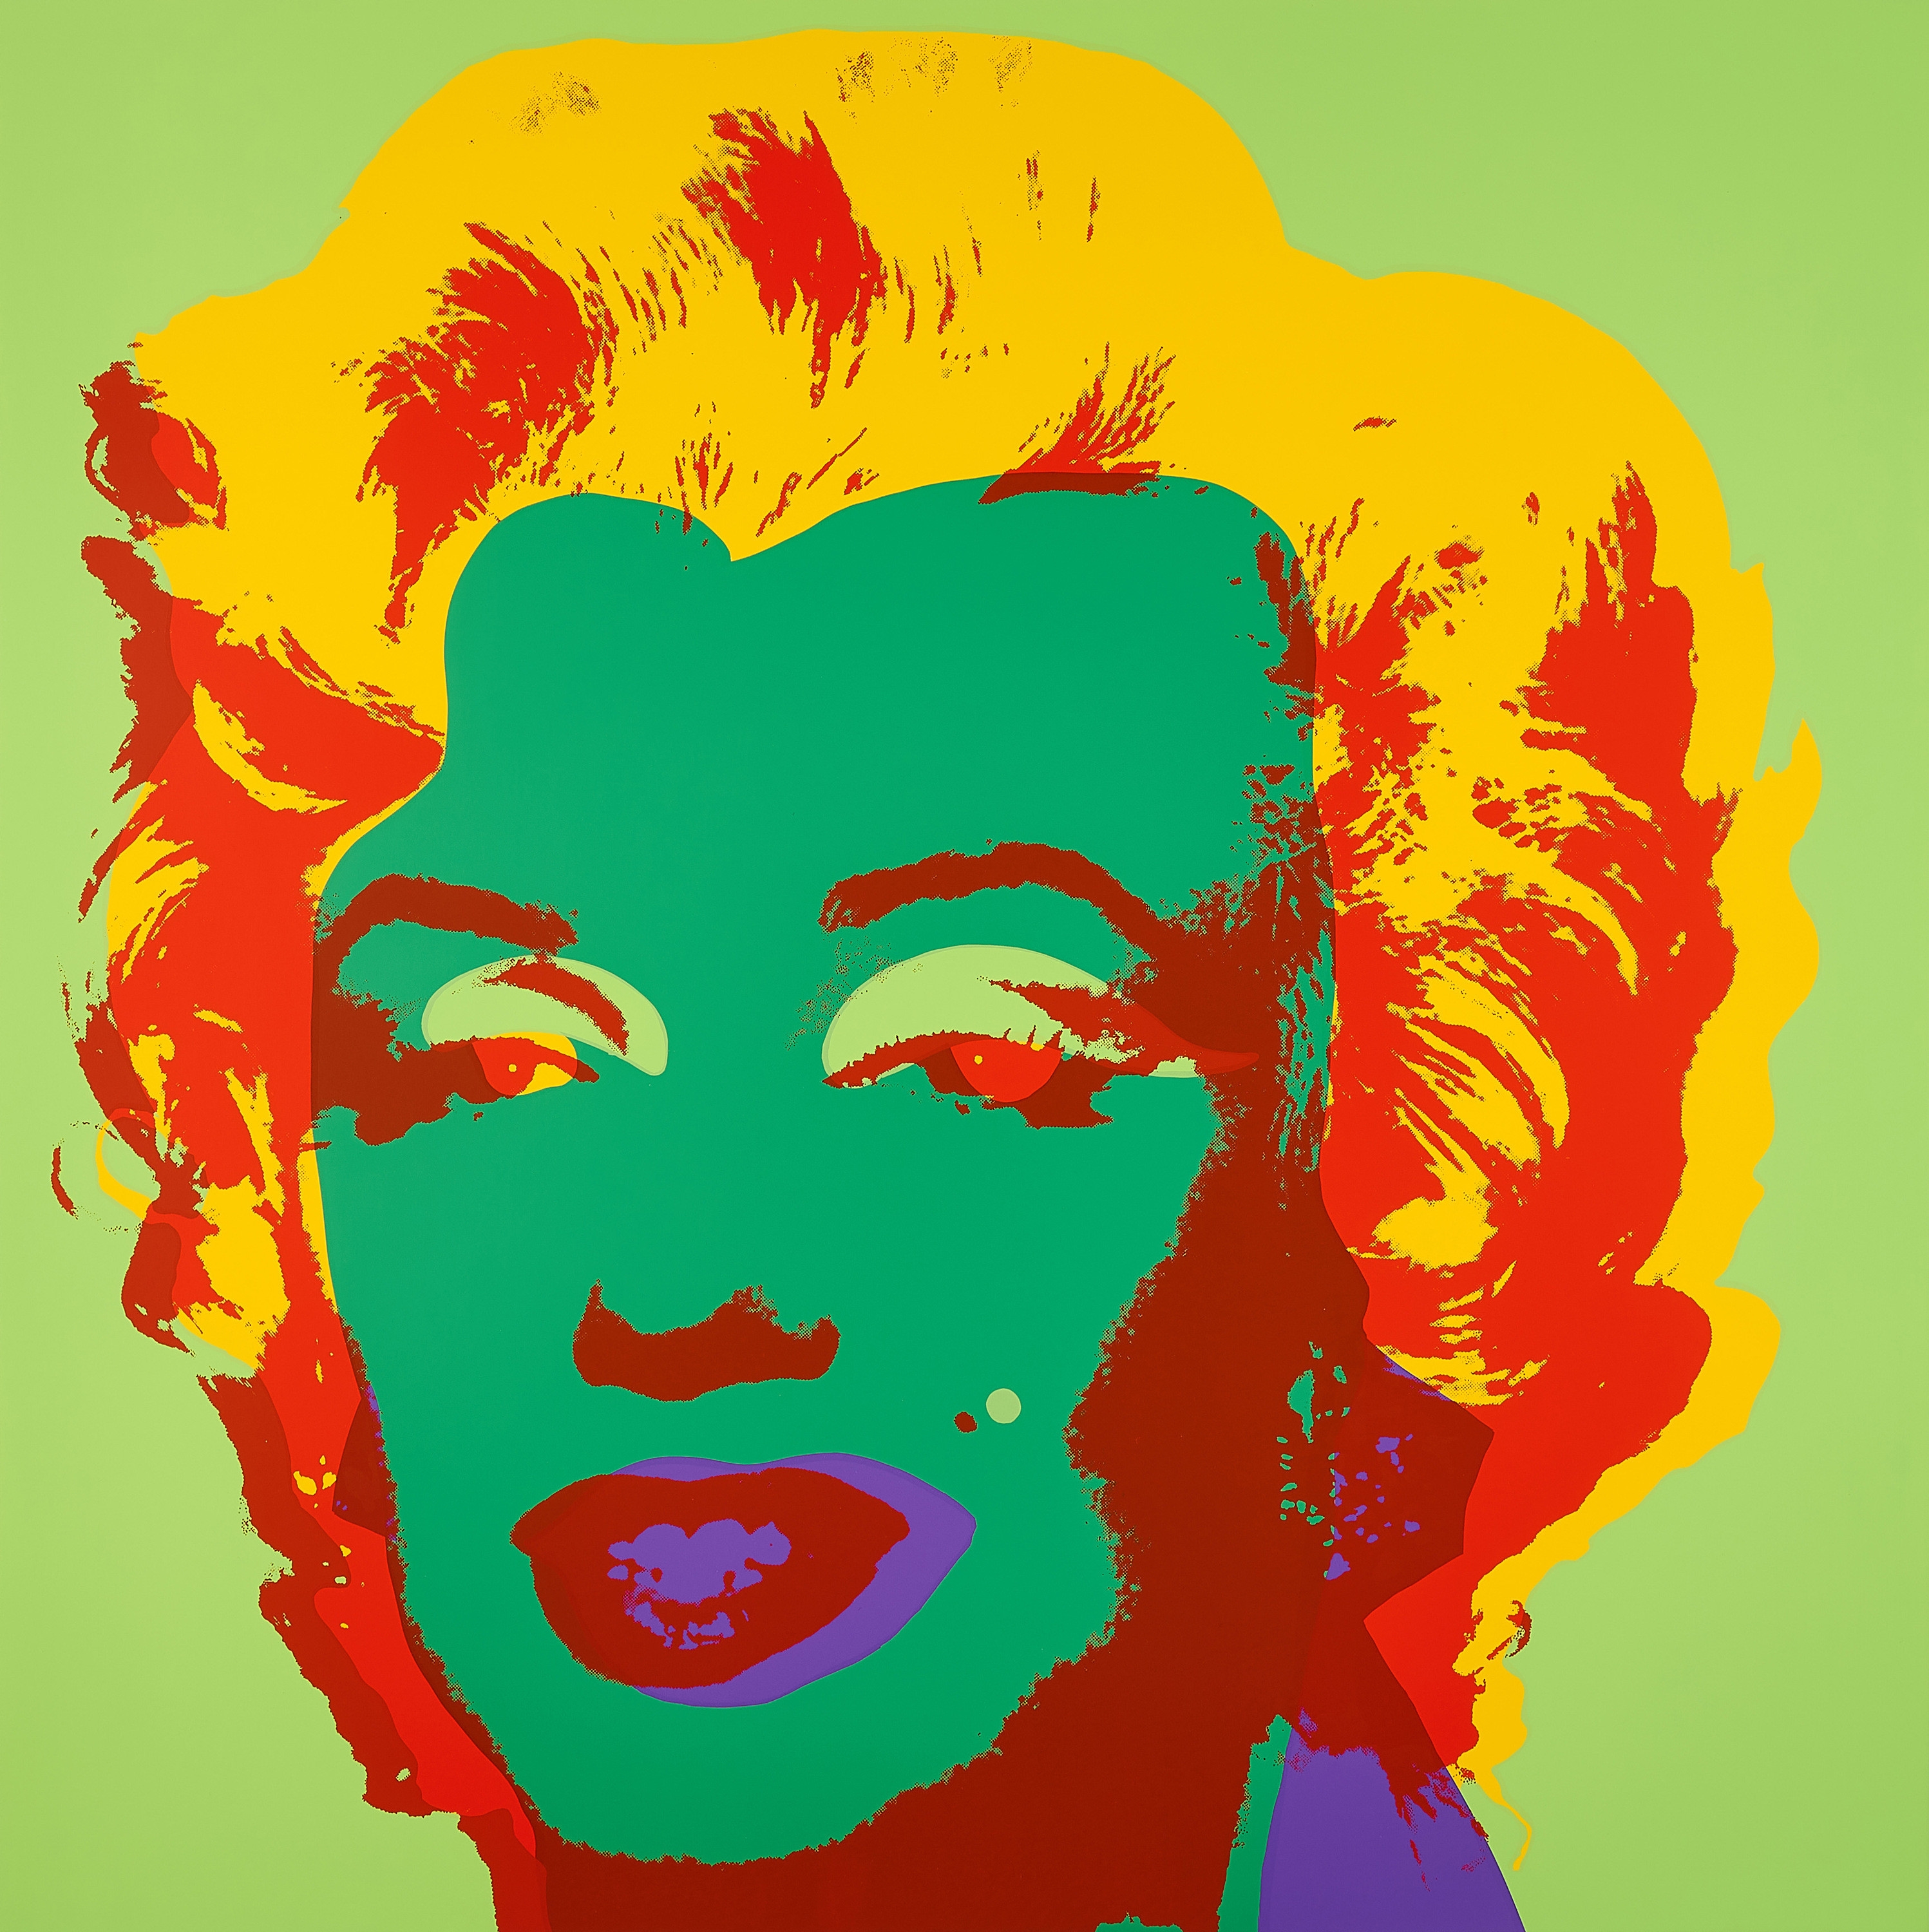 Artwork by Andy Warhol, Marilyn Monroe Portfolio., Made of Colour silkscreen on thin card